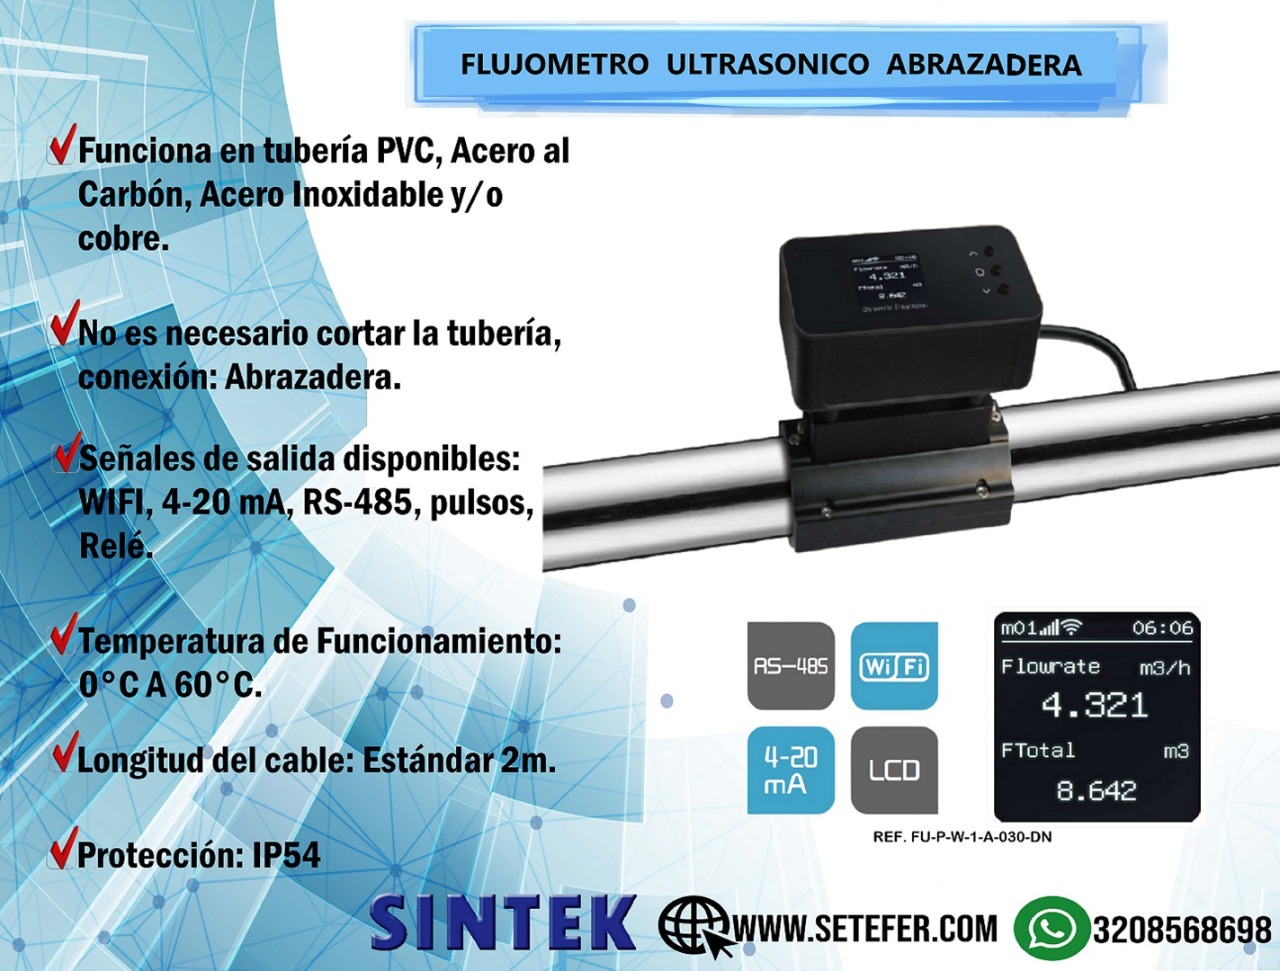 Flujometro Ultrasonico Abrazadera